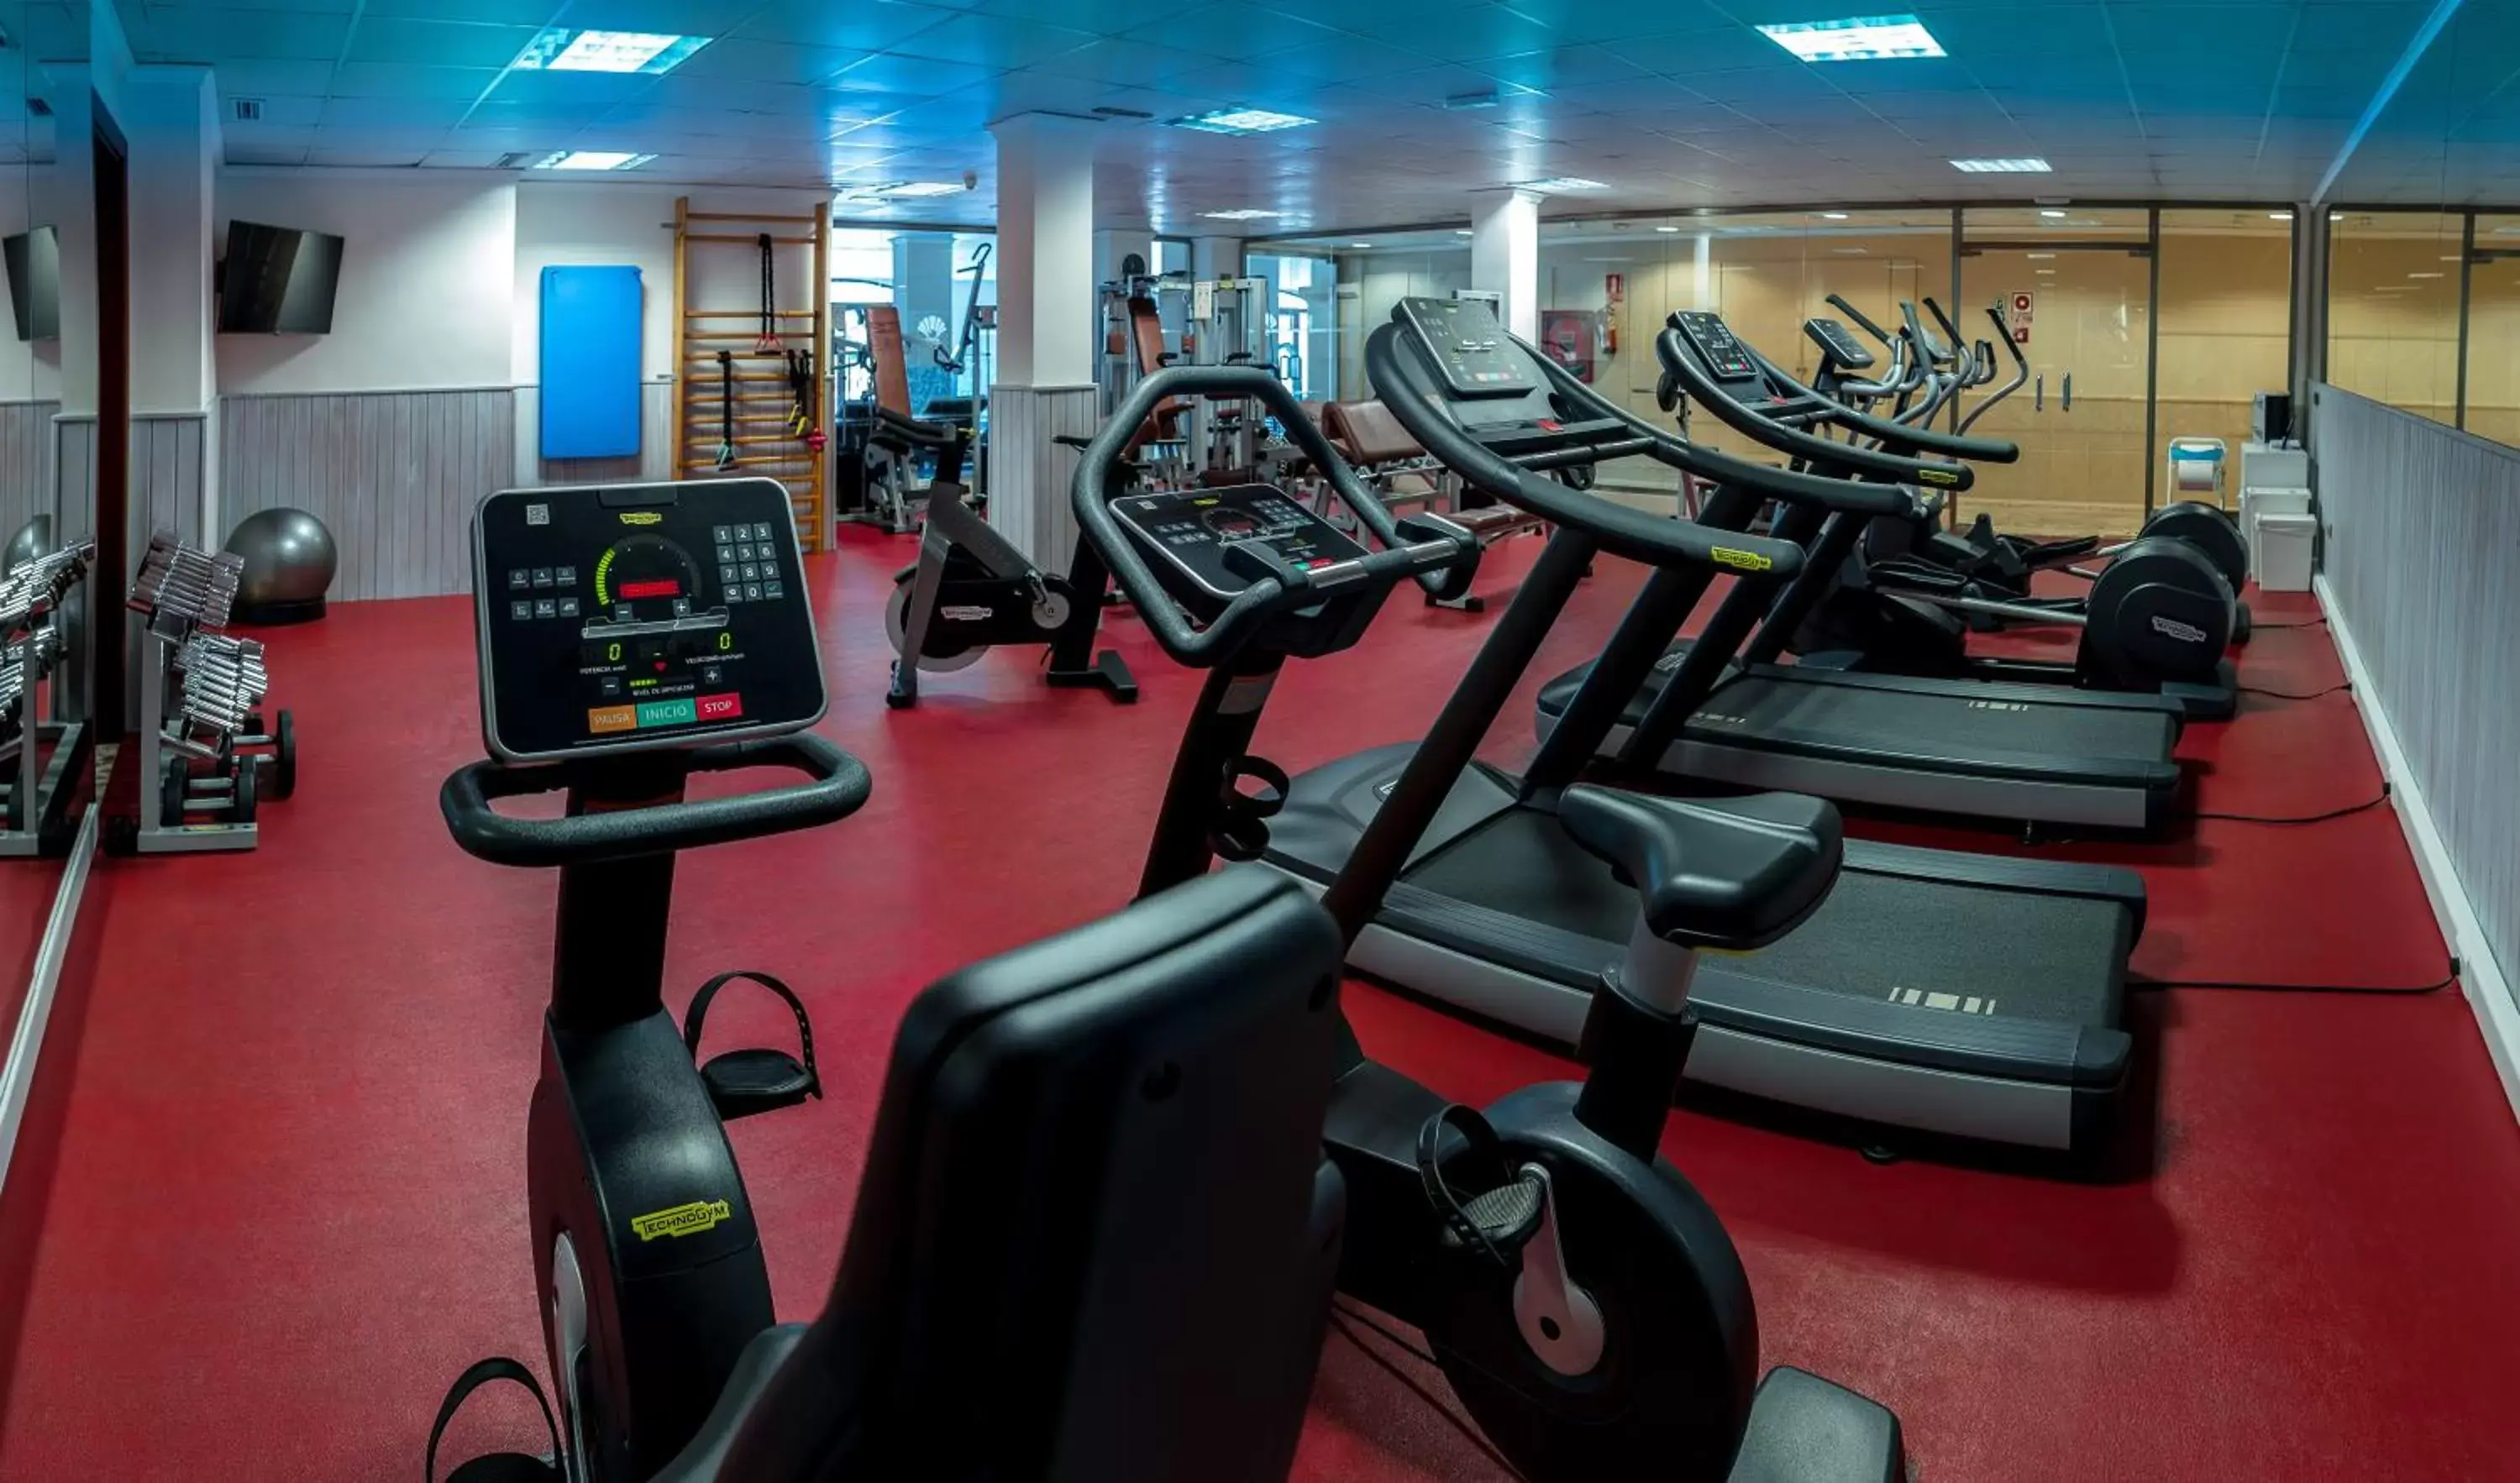 Fitness centre/facilities in SH Villa Gadea